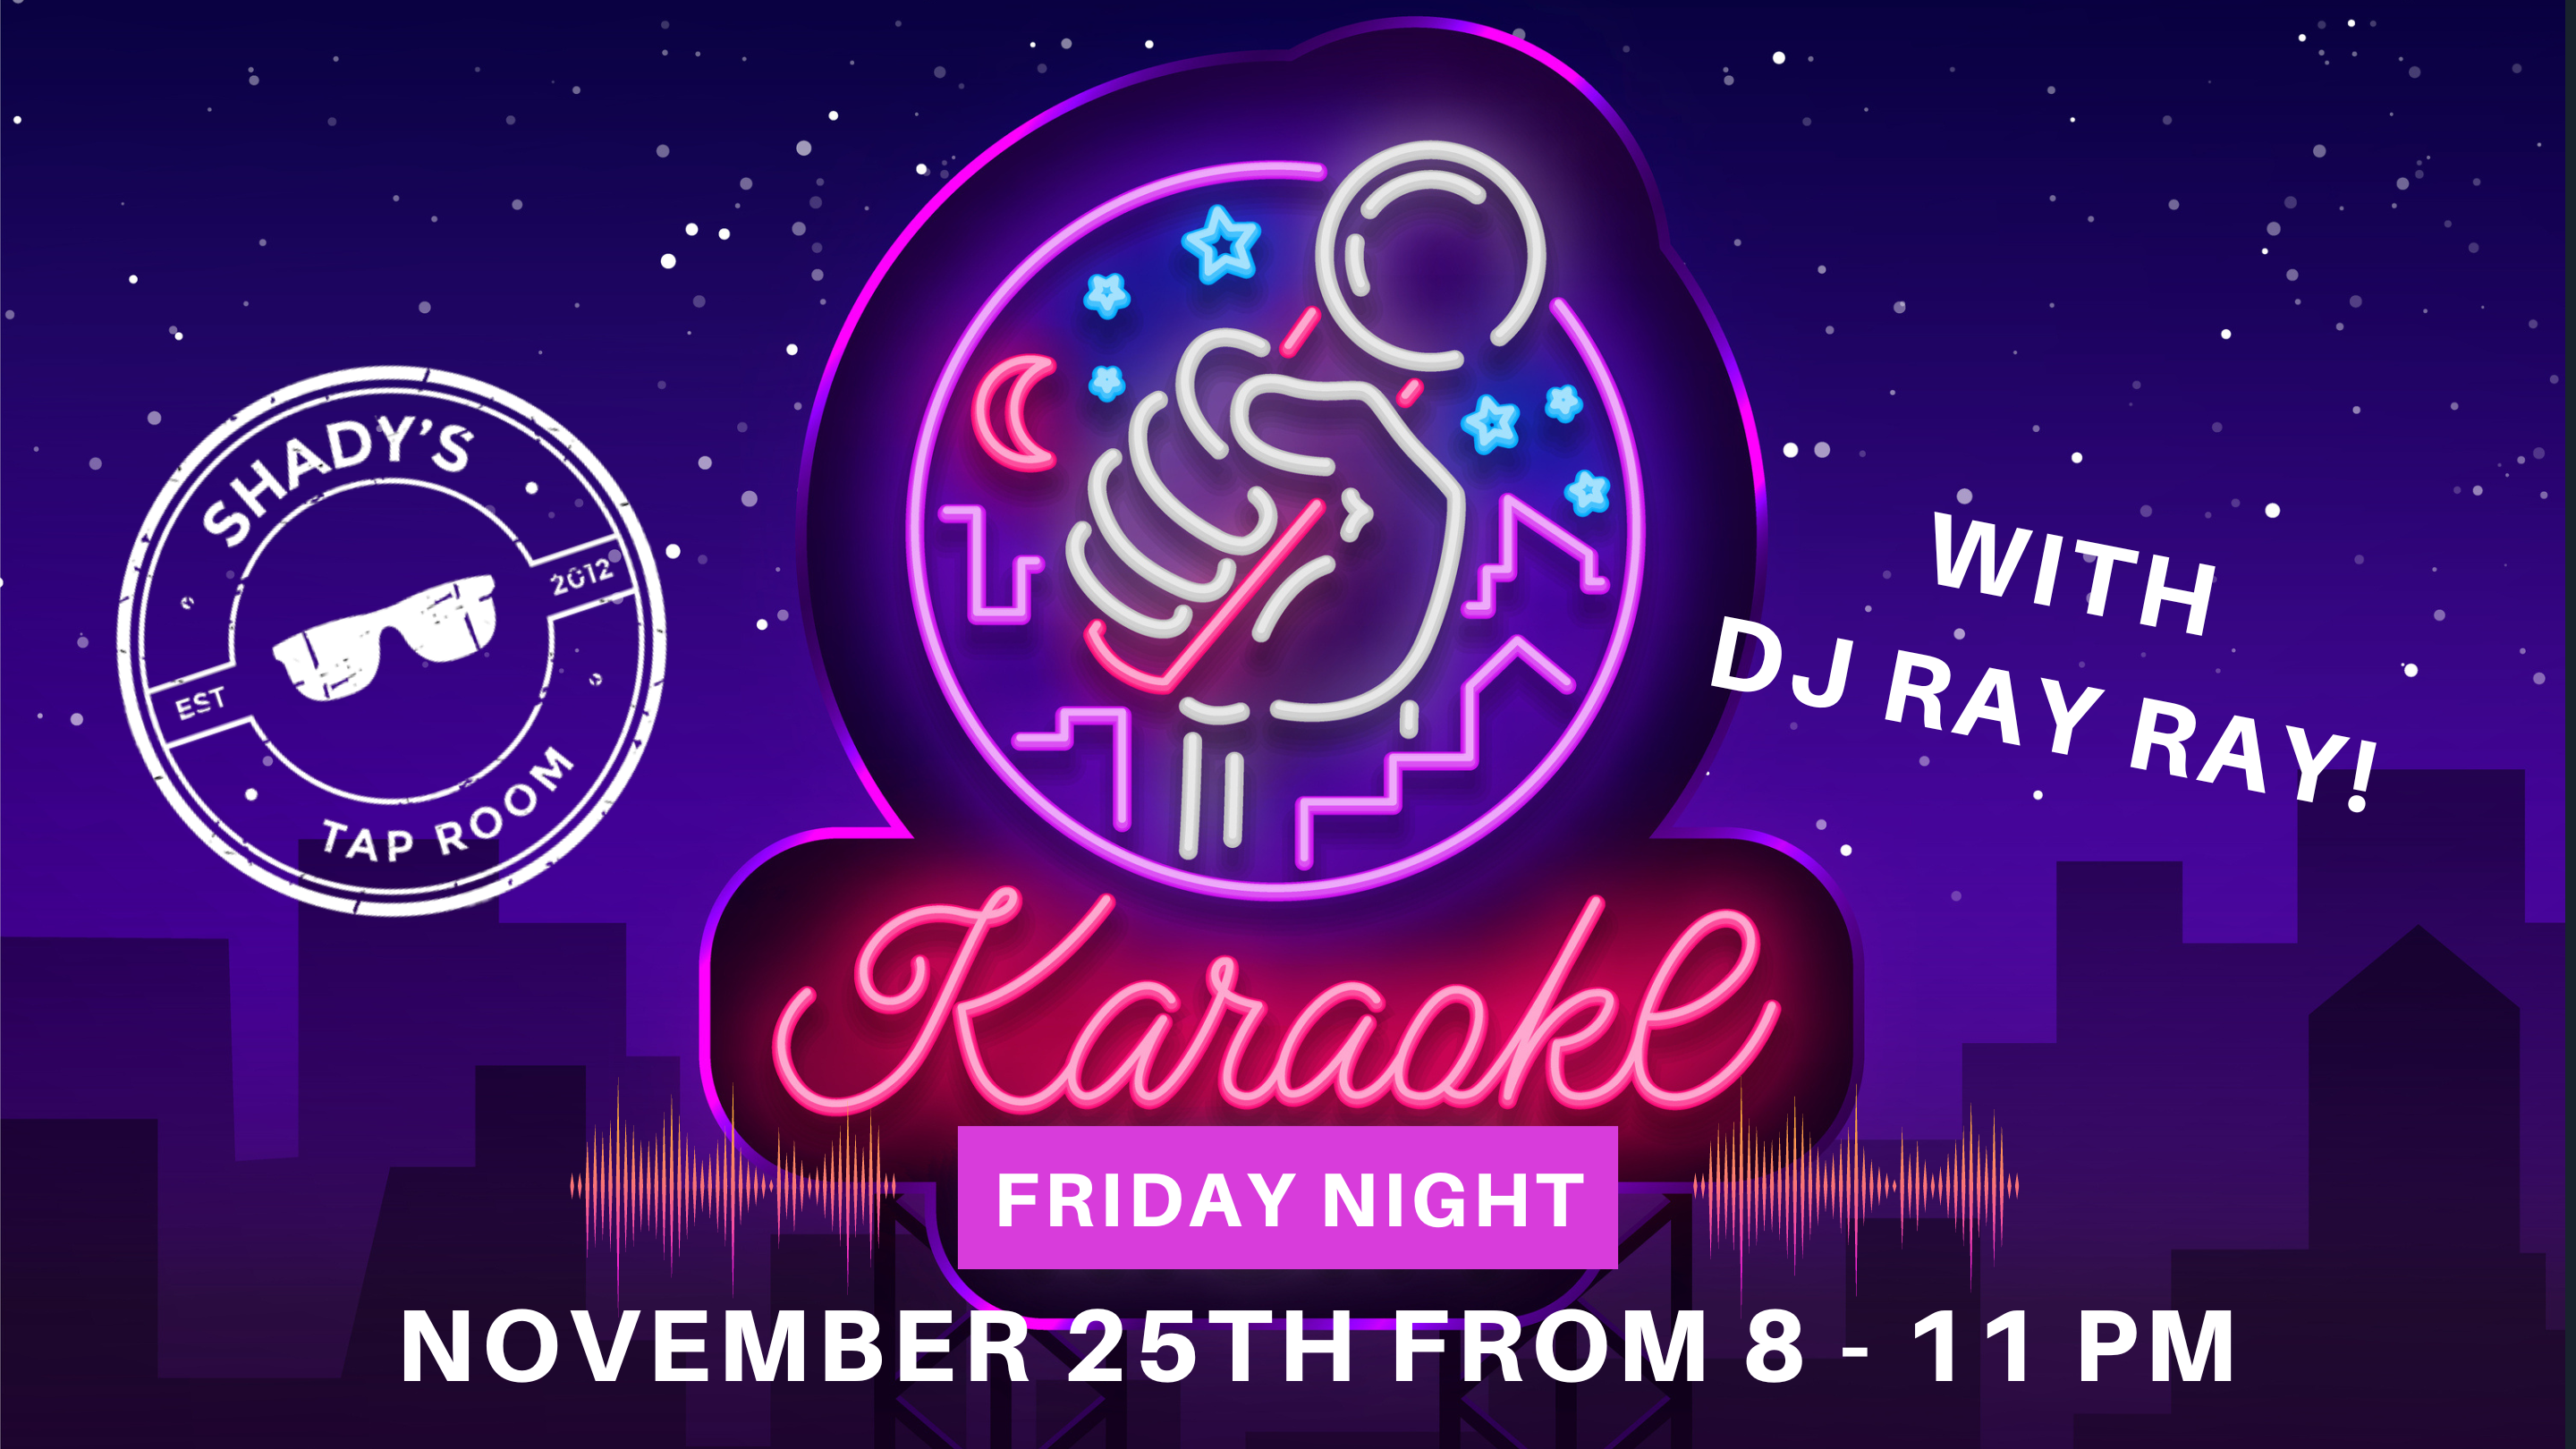 Karaoke Friday Night at Shady's Tap Room